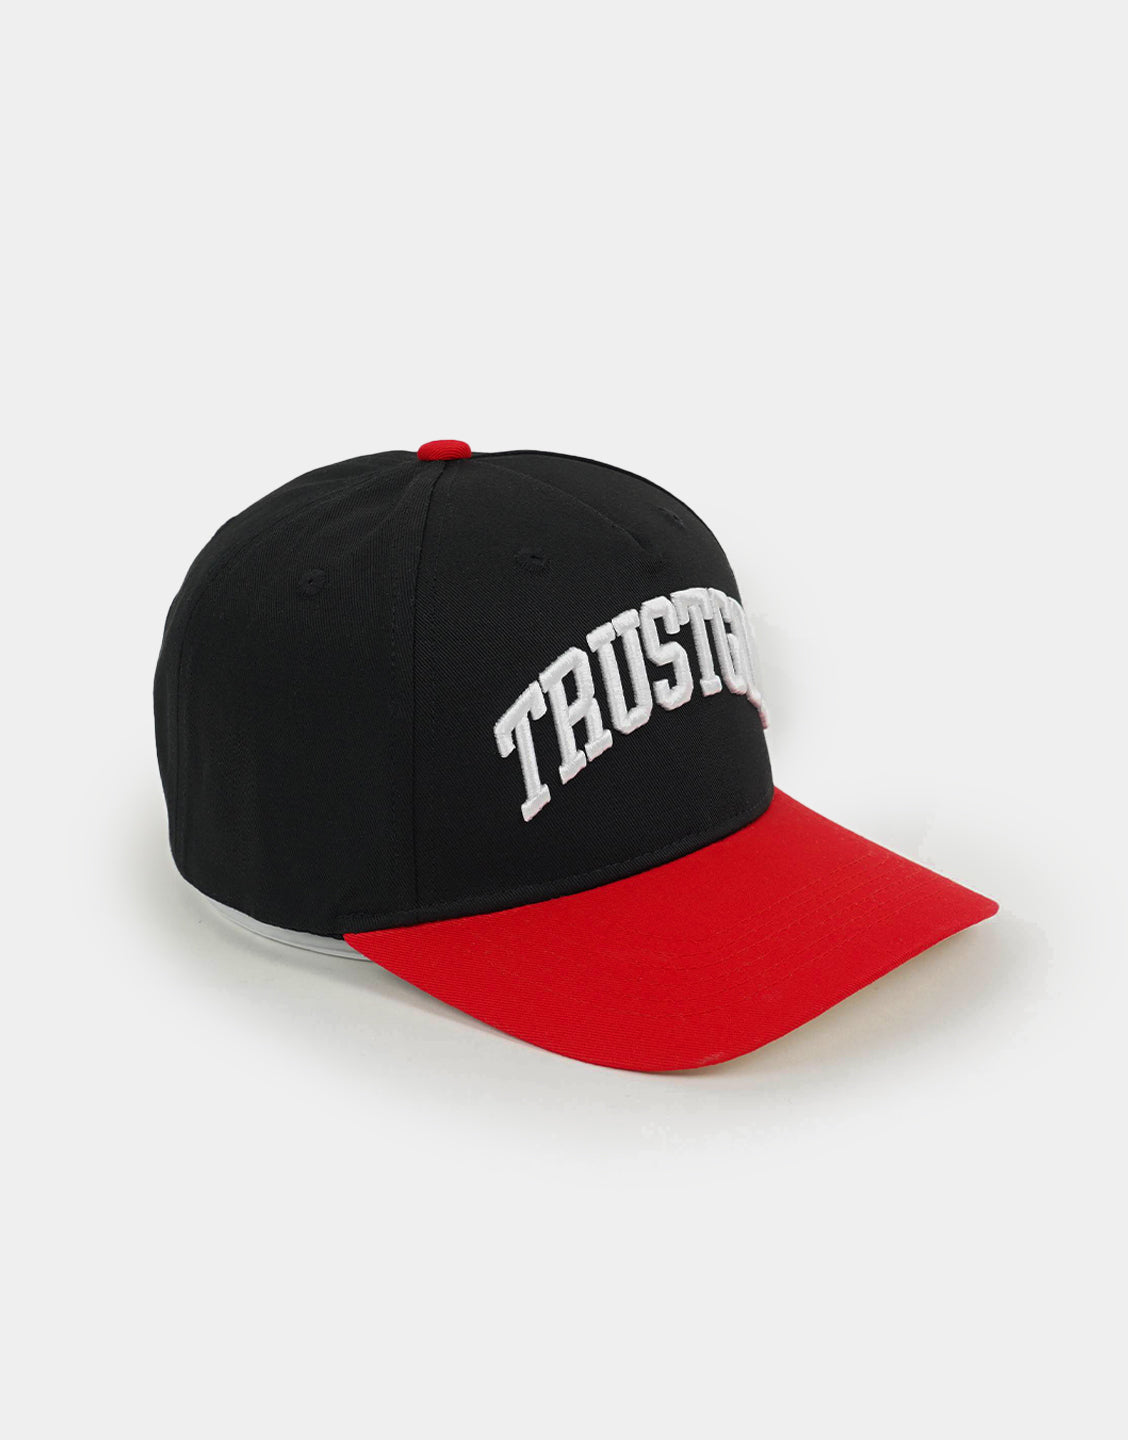 Black Trust God Premium Baseball Hat - Red Accent - VOTC Clothing